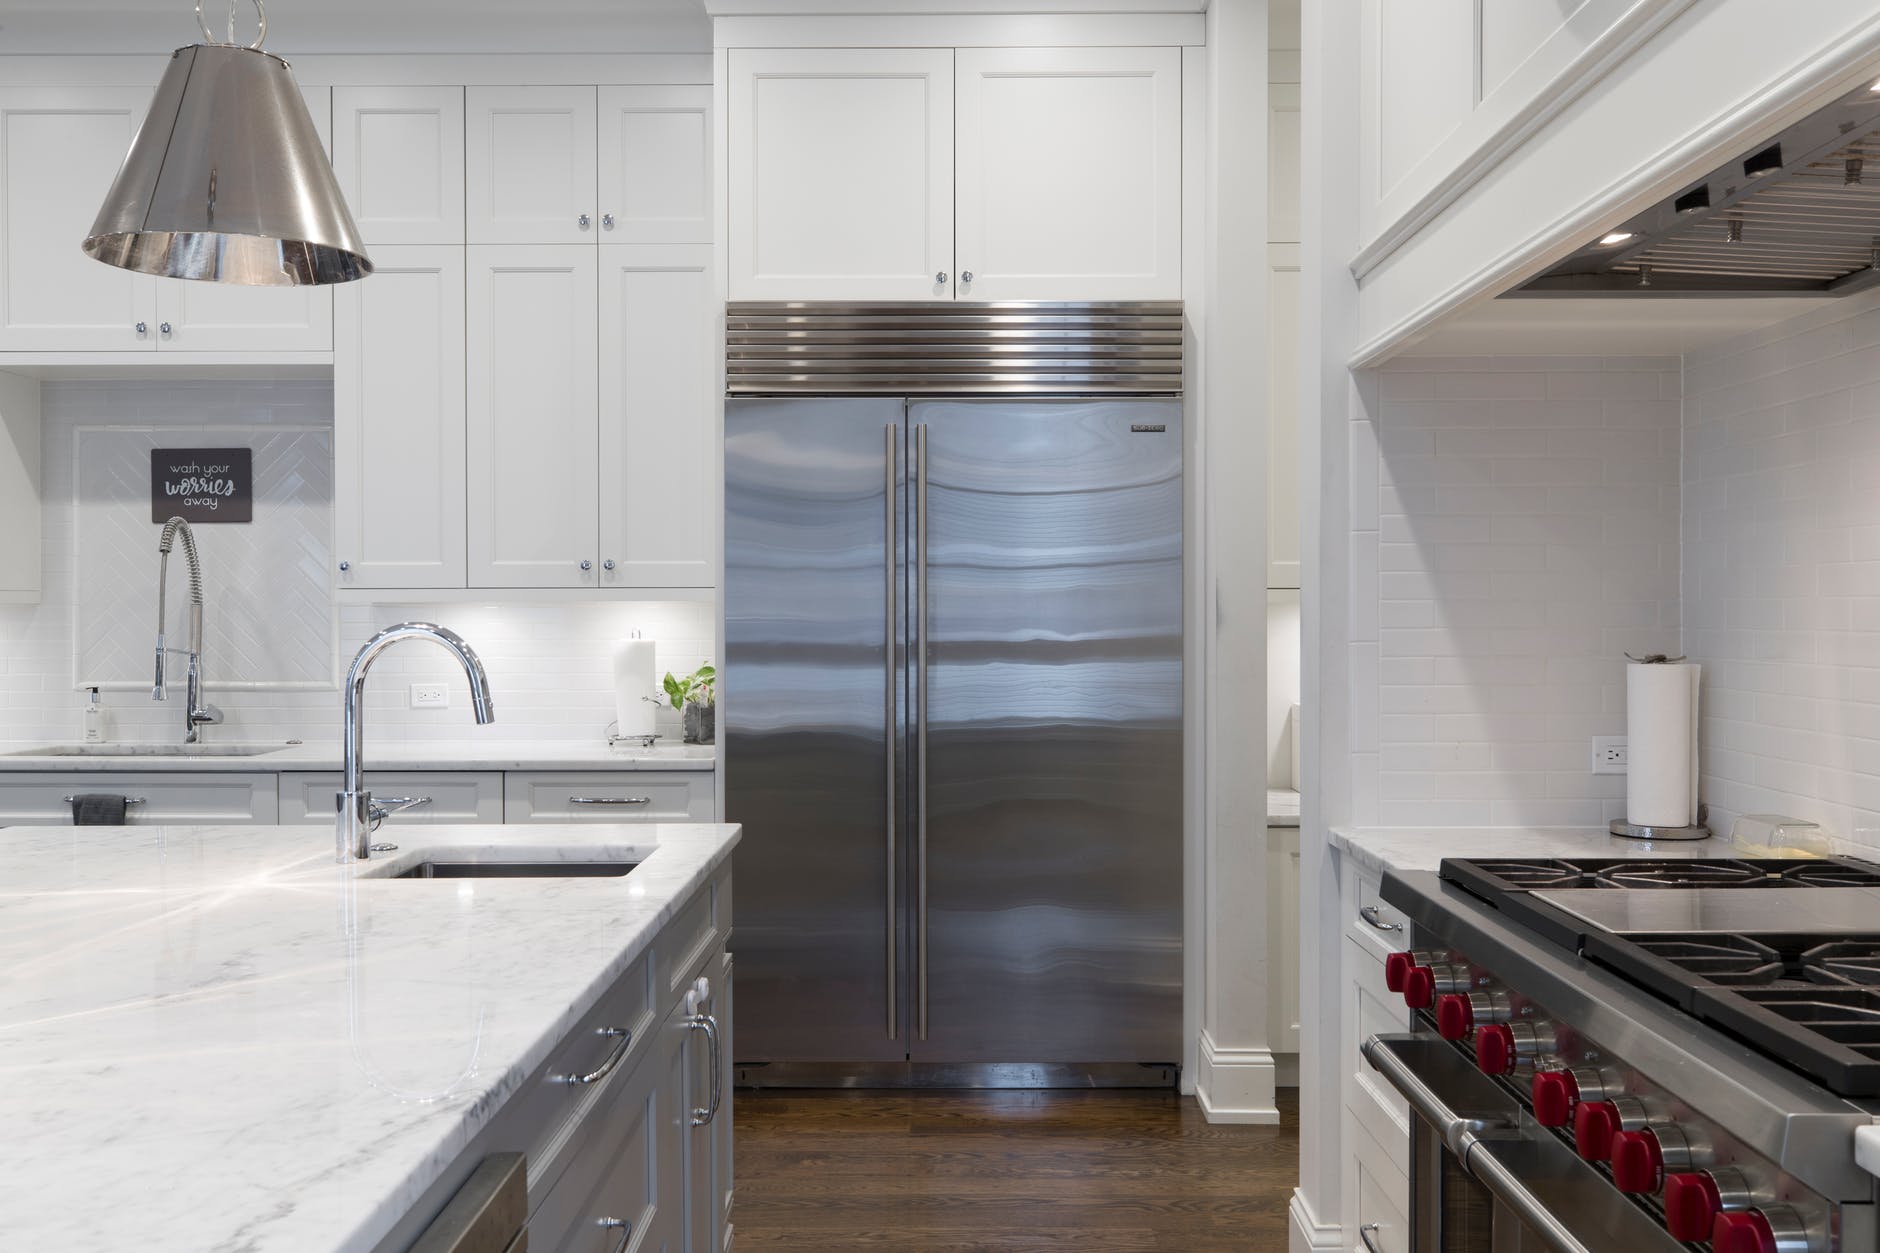 stainless steel refrigerator beside white kitchen cabinet